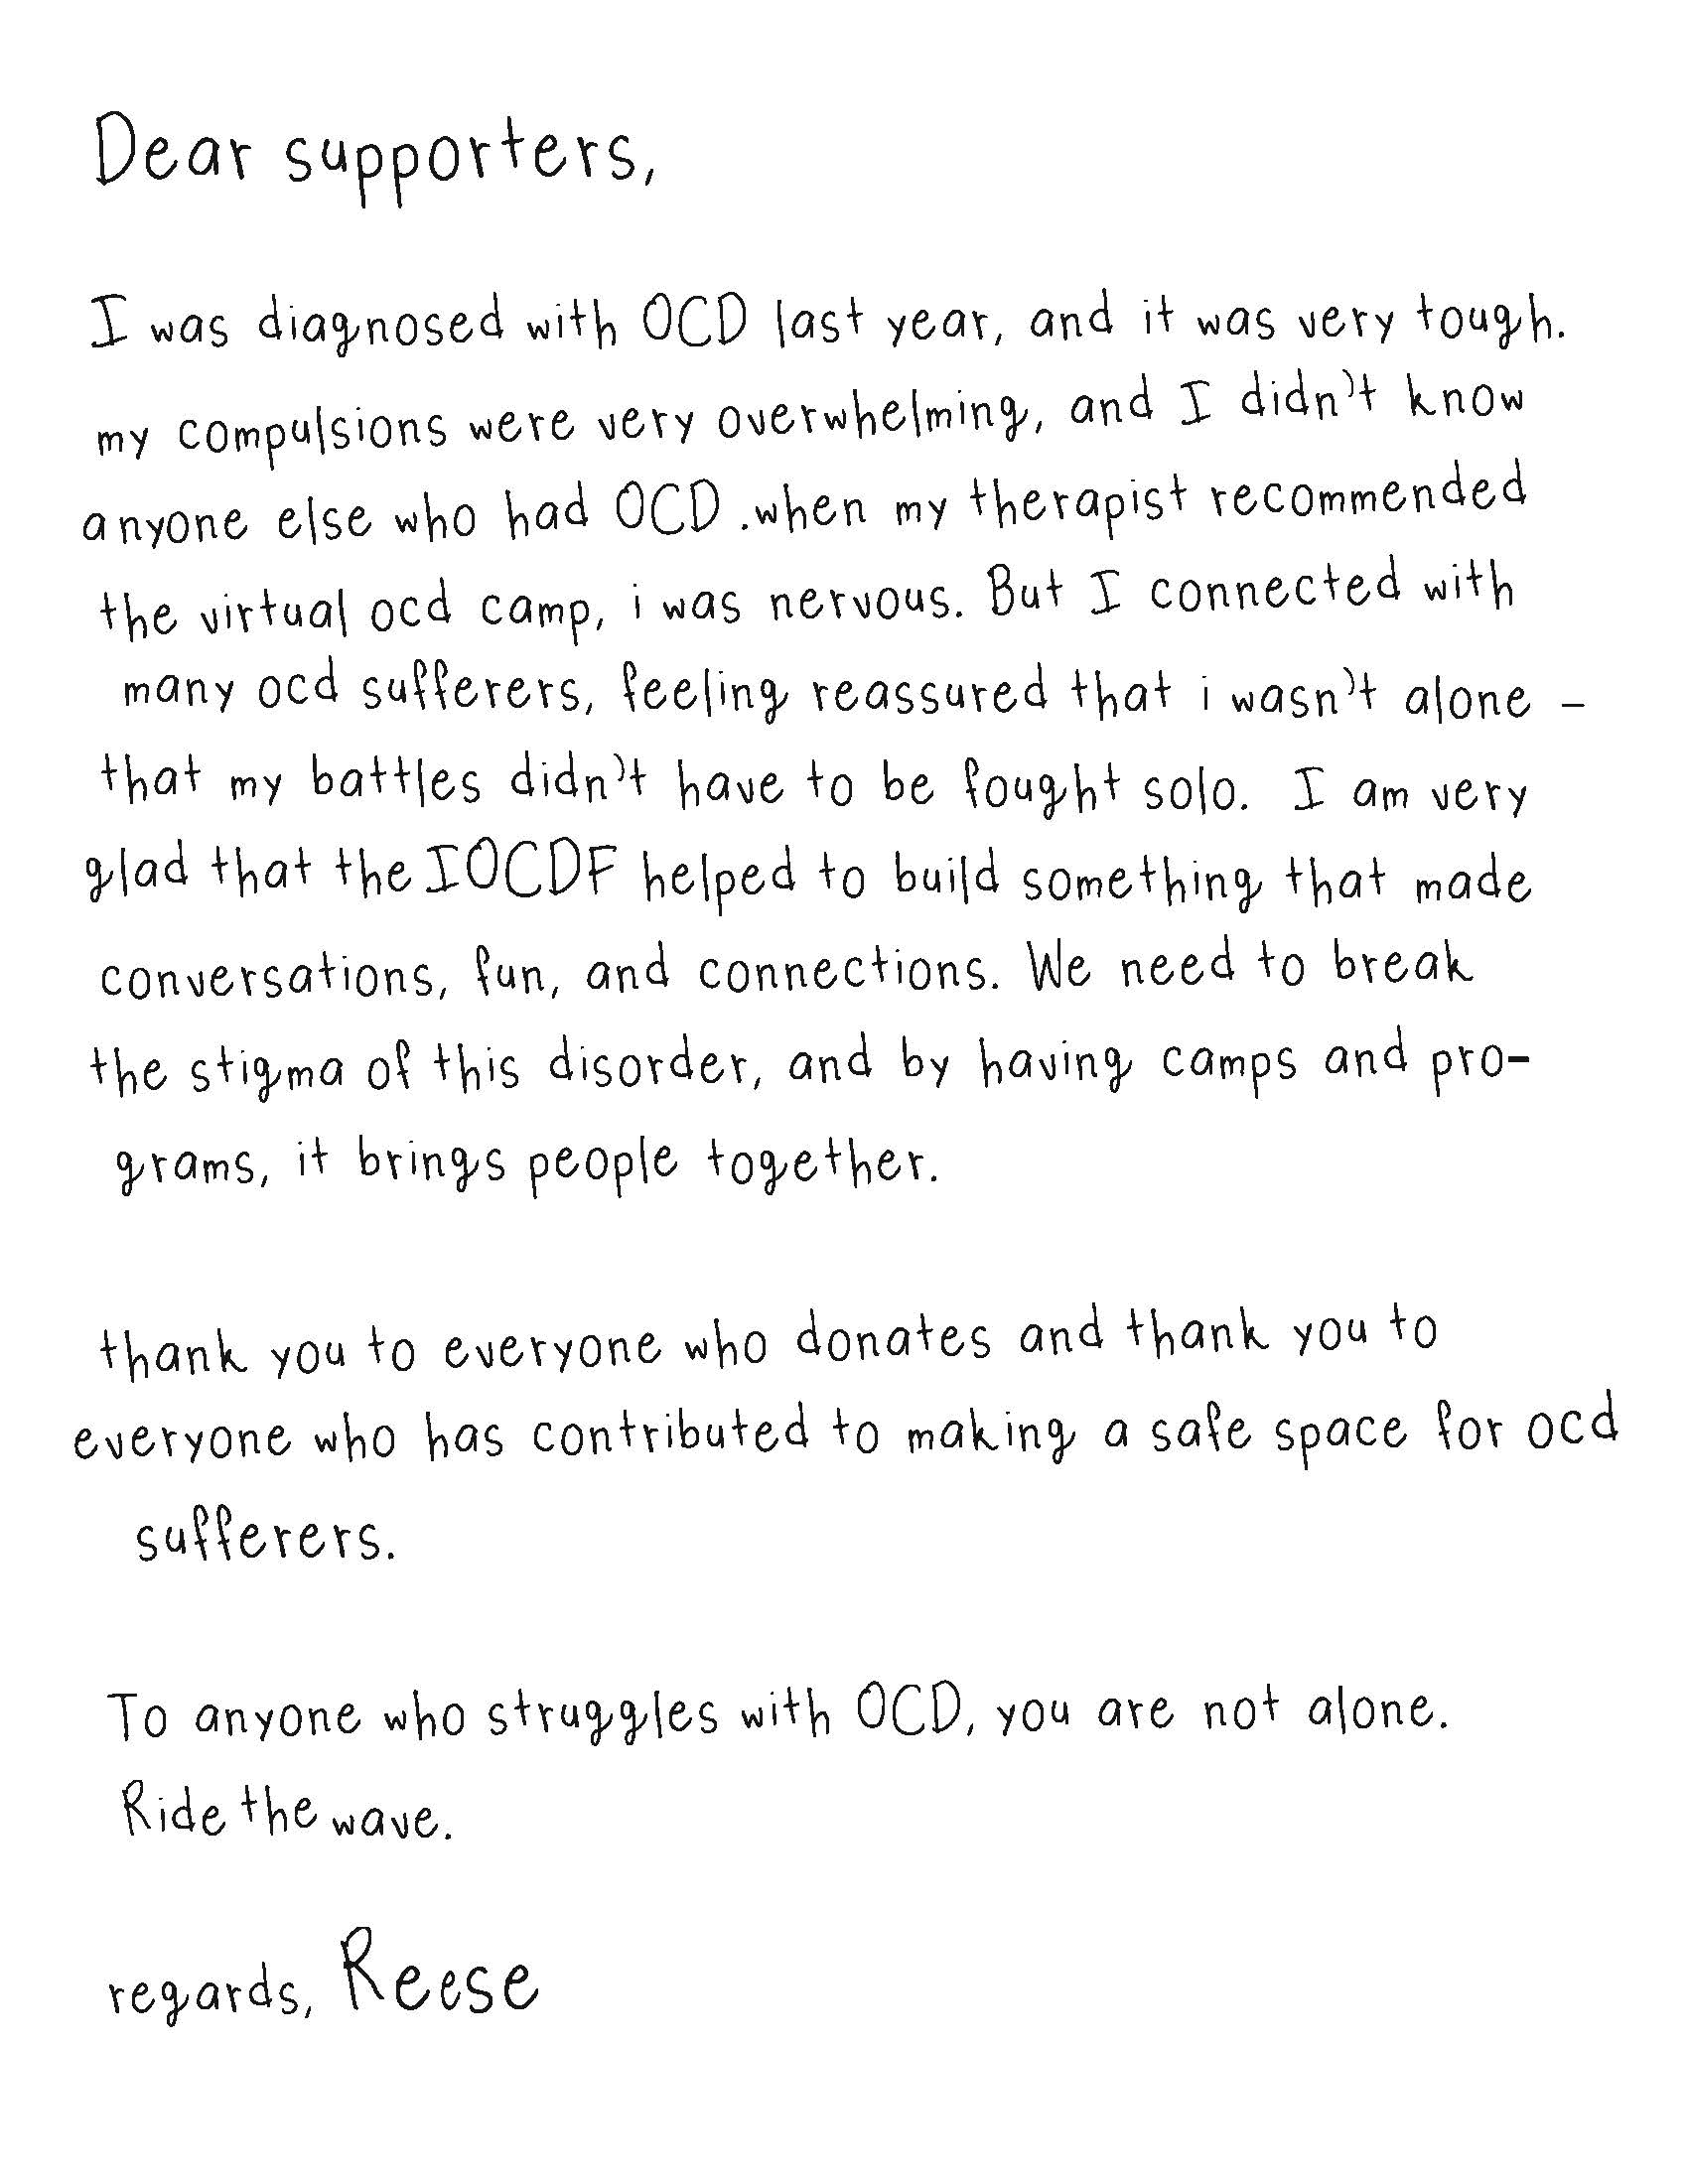 OCD Spring Appeal Reese Letter Image